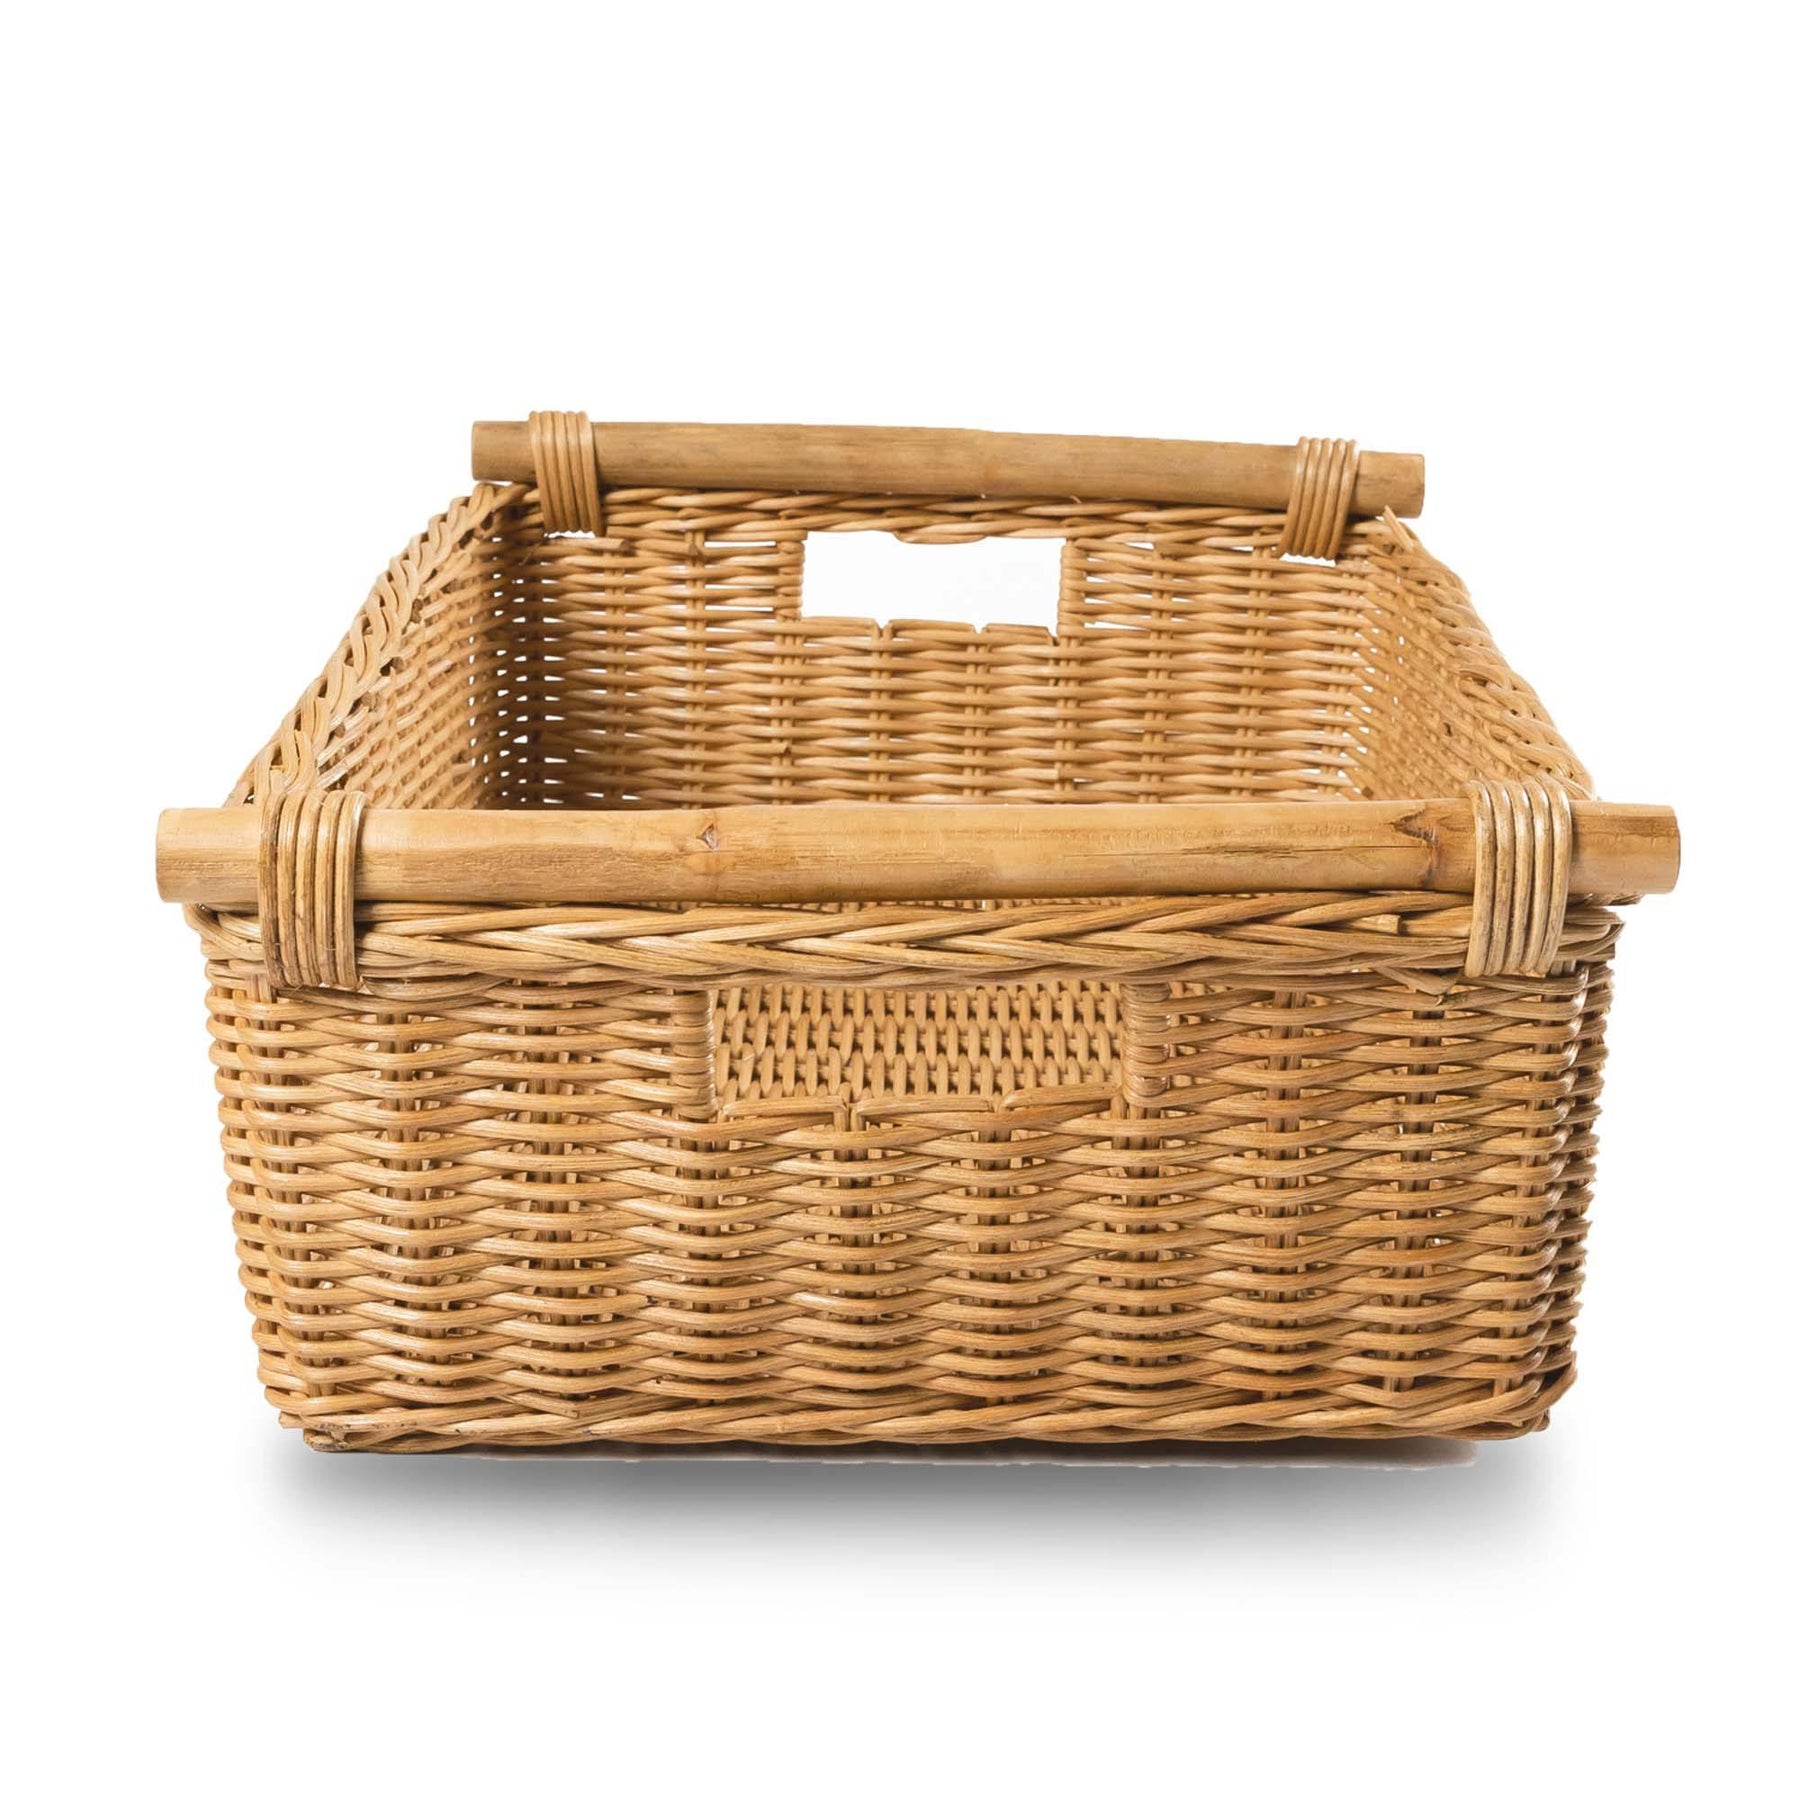 Wicker Baskets for Office Organization – The Basket Lady